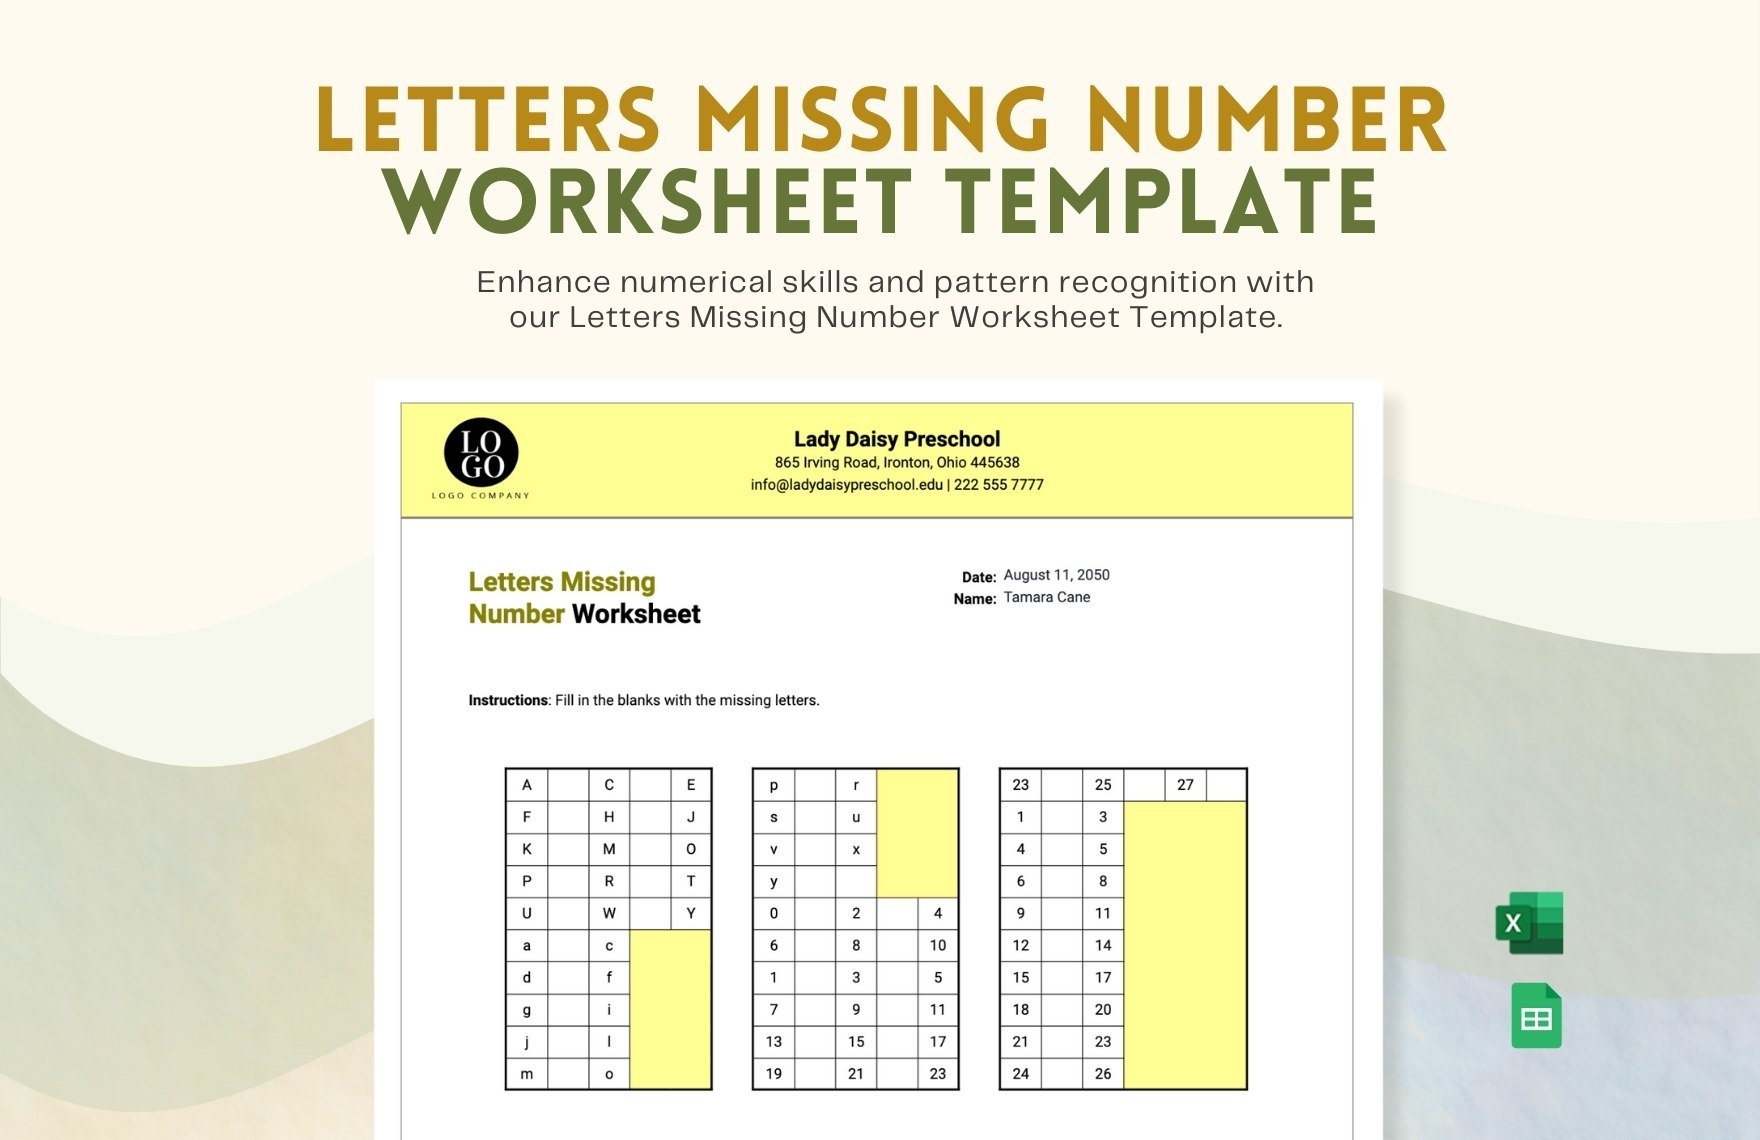 Letters Missing Number Worksheet Template in Excel, Google Sheets